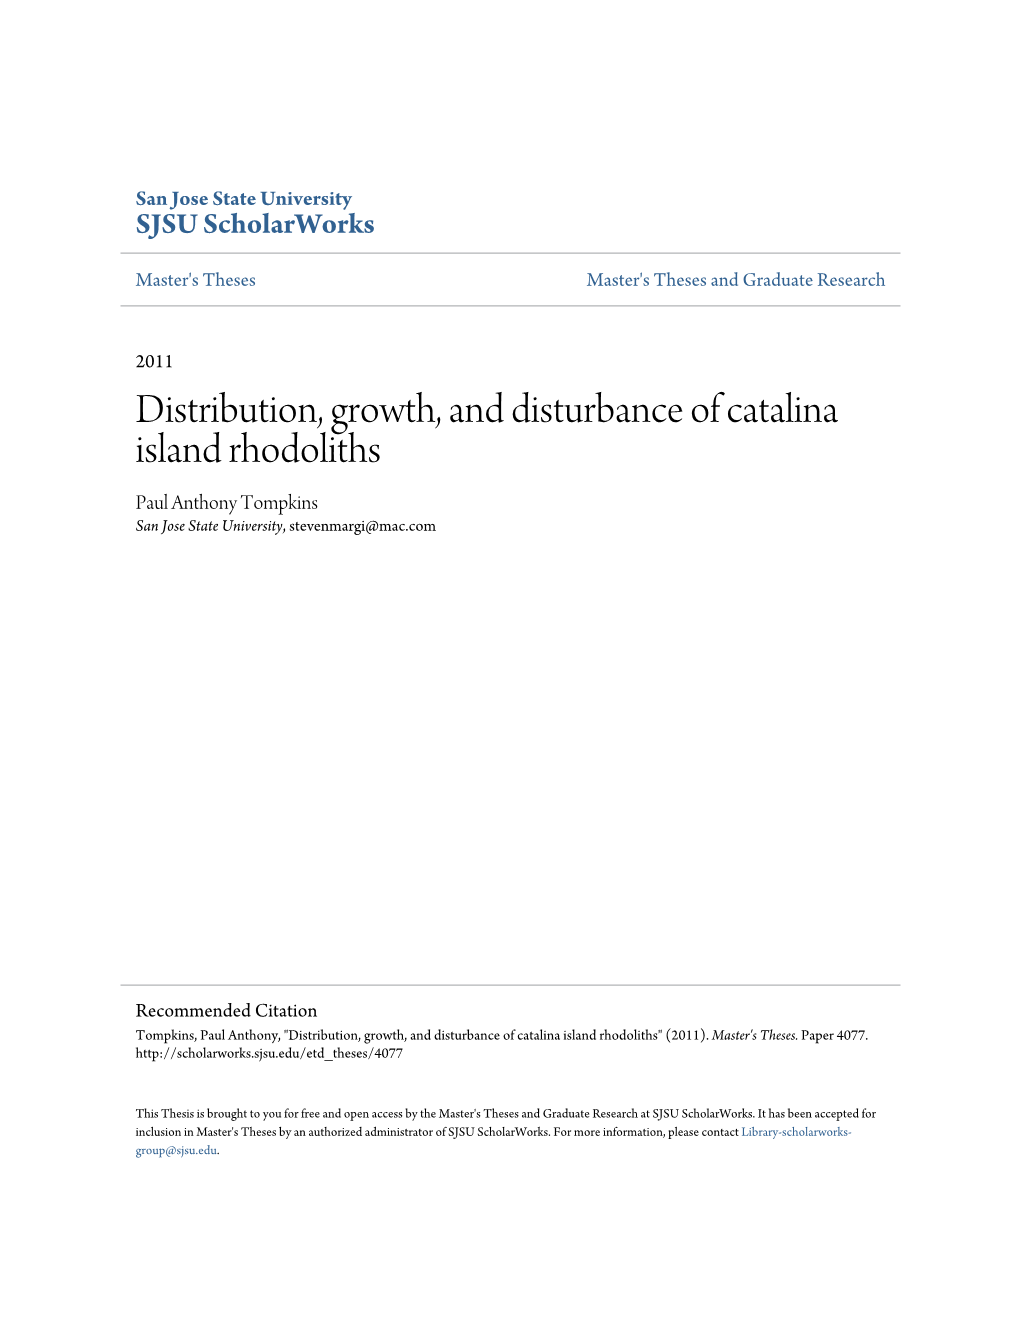 Distribution, Growth, and Disturbance of Catalina Island Rhodoliths Paul Anthony Tompkins San Jose State University, Stevenmargi@Mac.Com